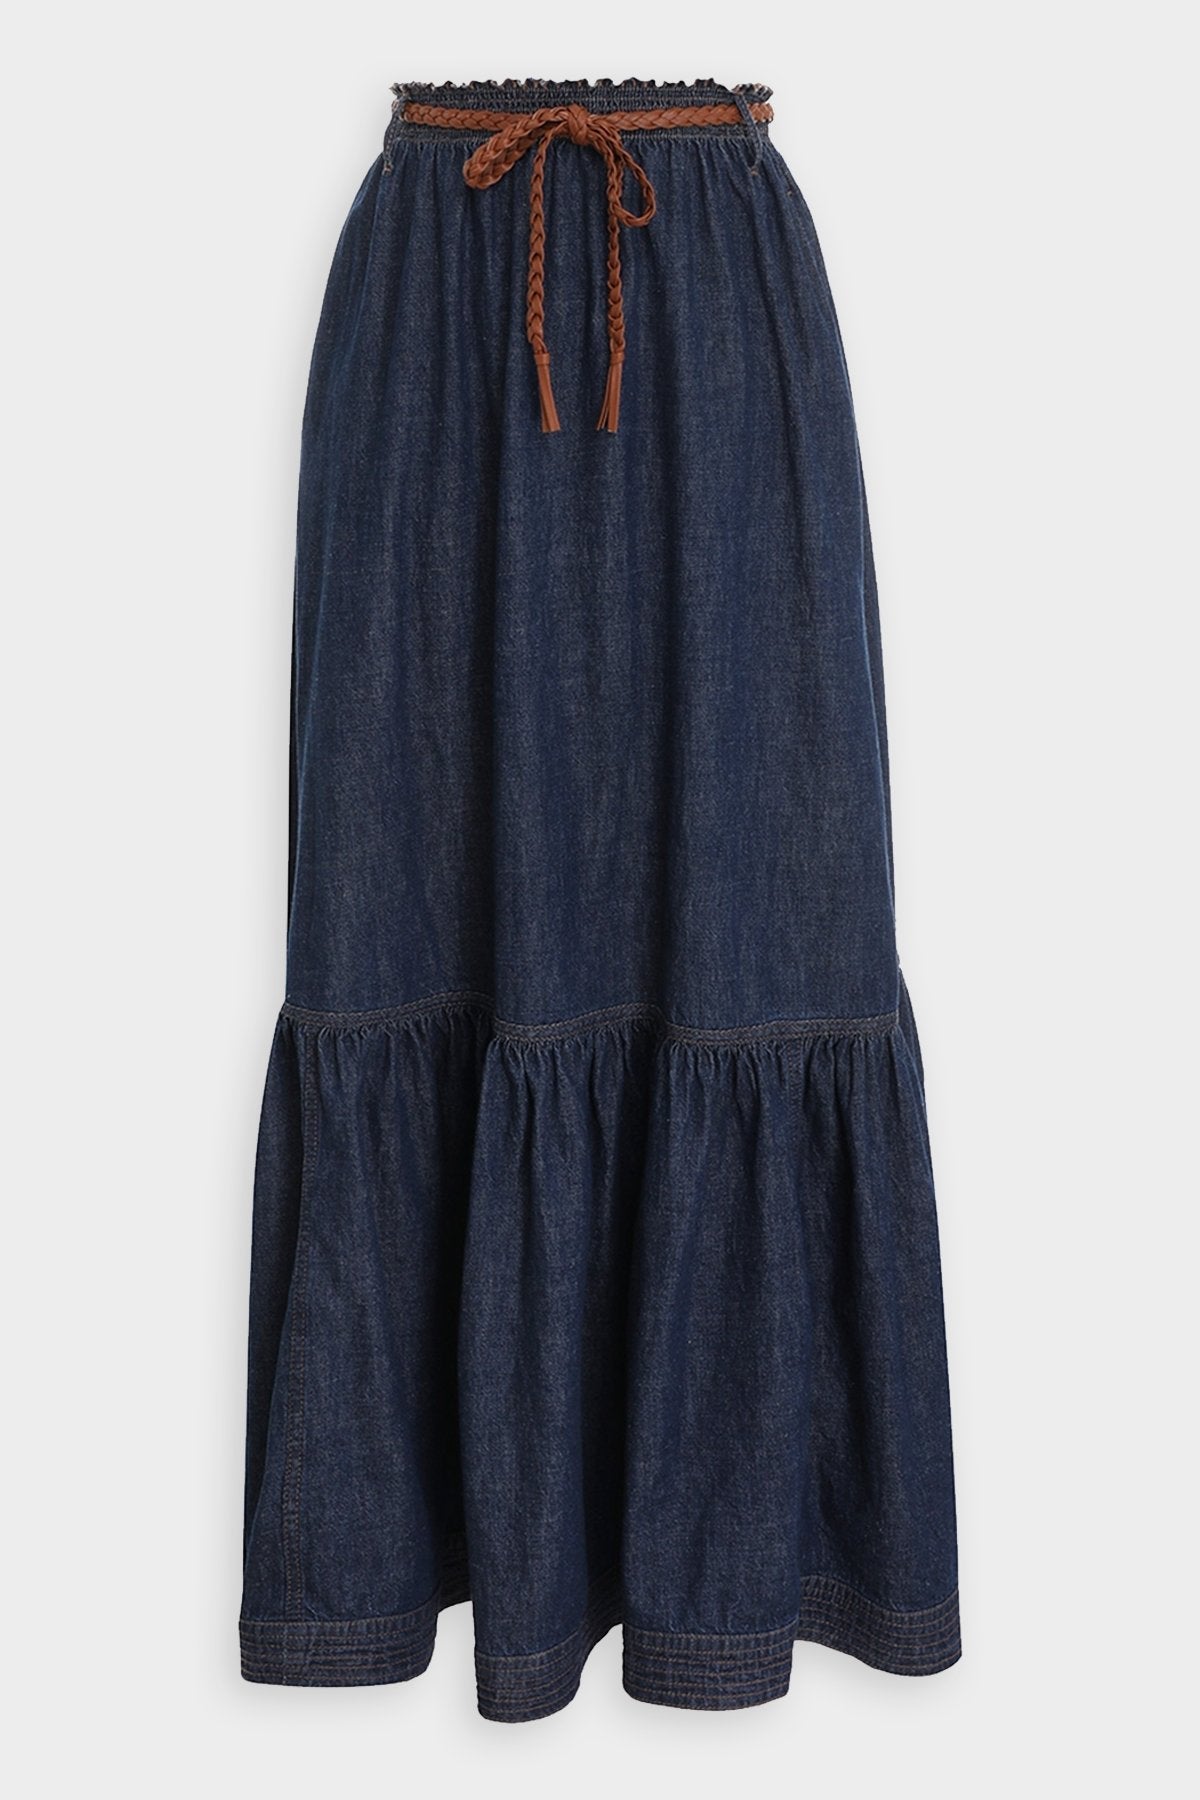 Moonshine Tiered Midi Skirt in Atlantic - shop-olivia.com